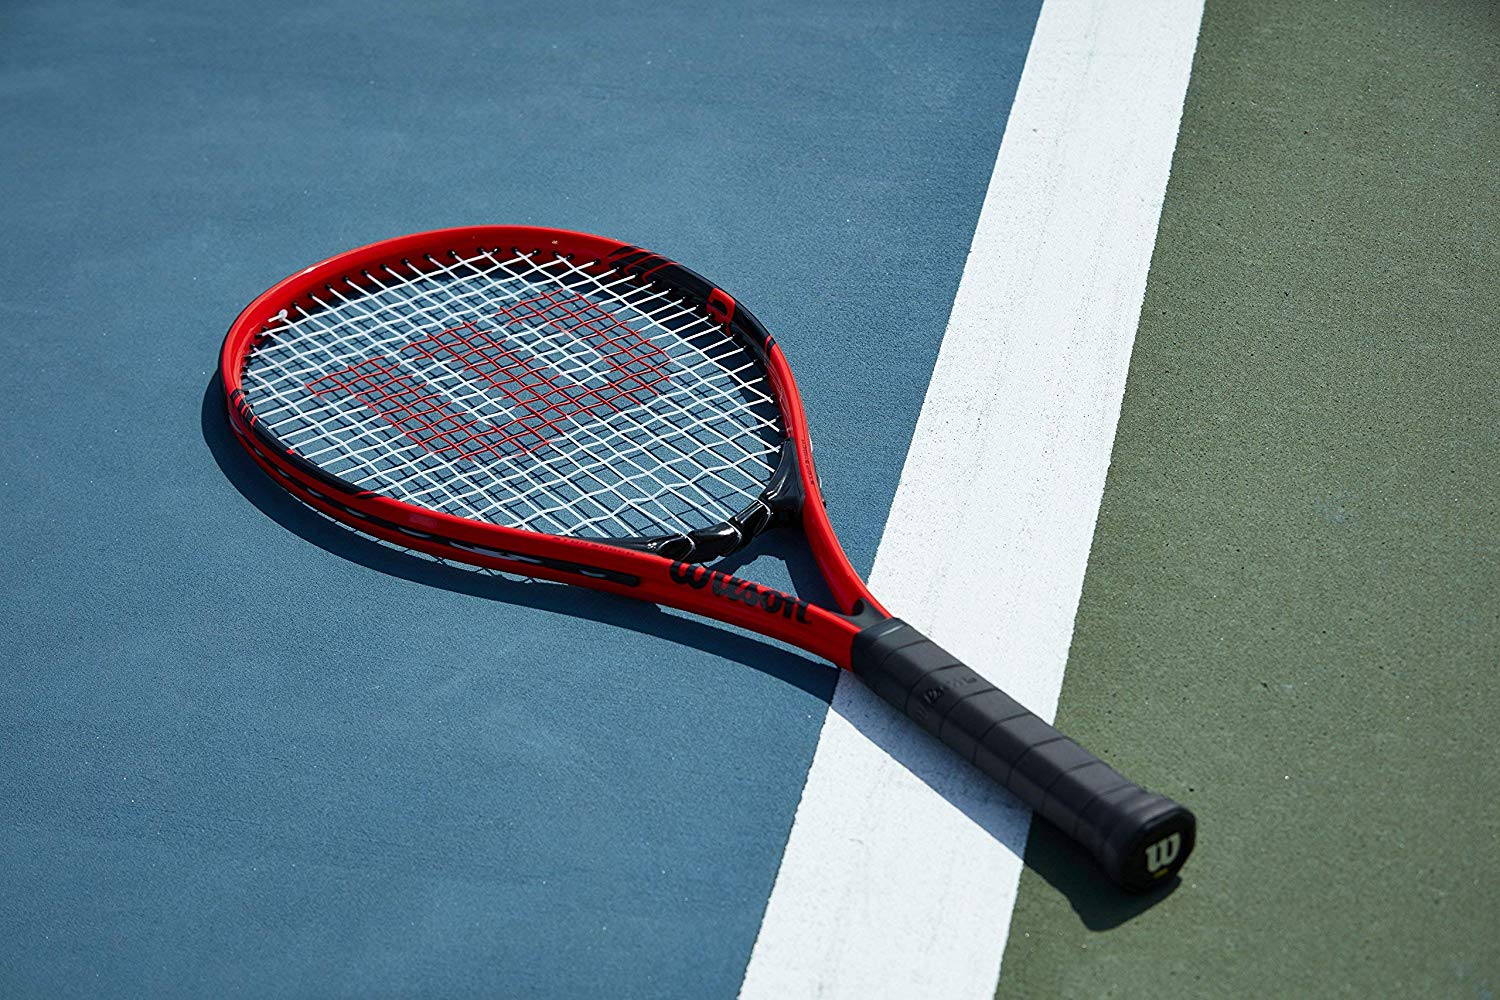 Wilson Federer Adult Strung Tennis Racket Review (2021): For Beginners?